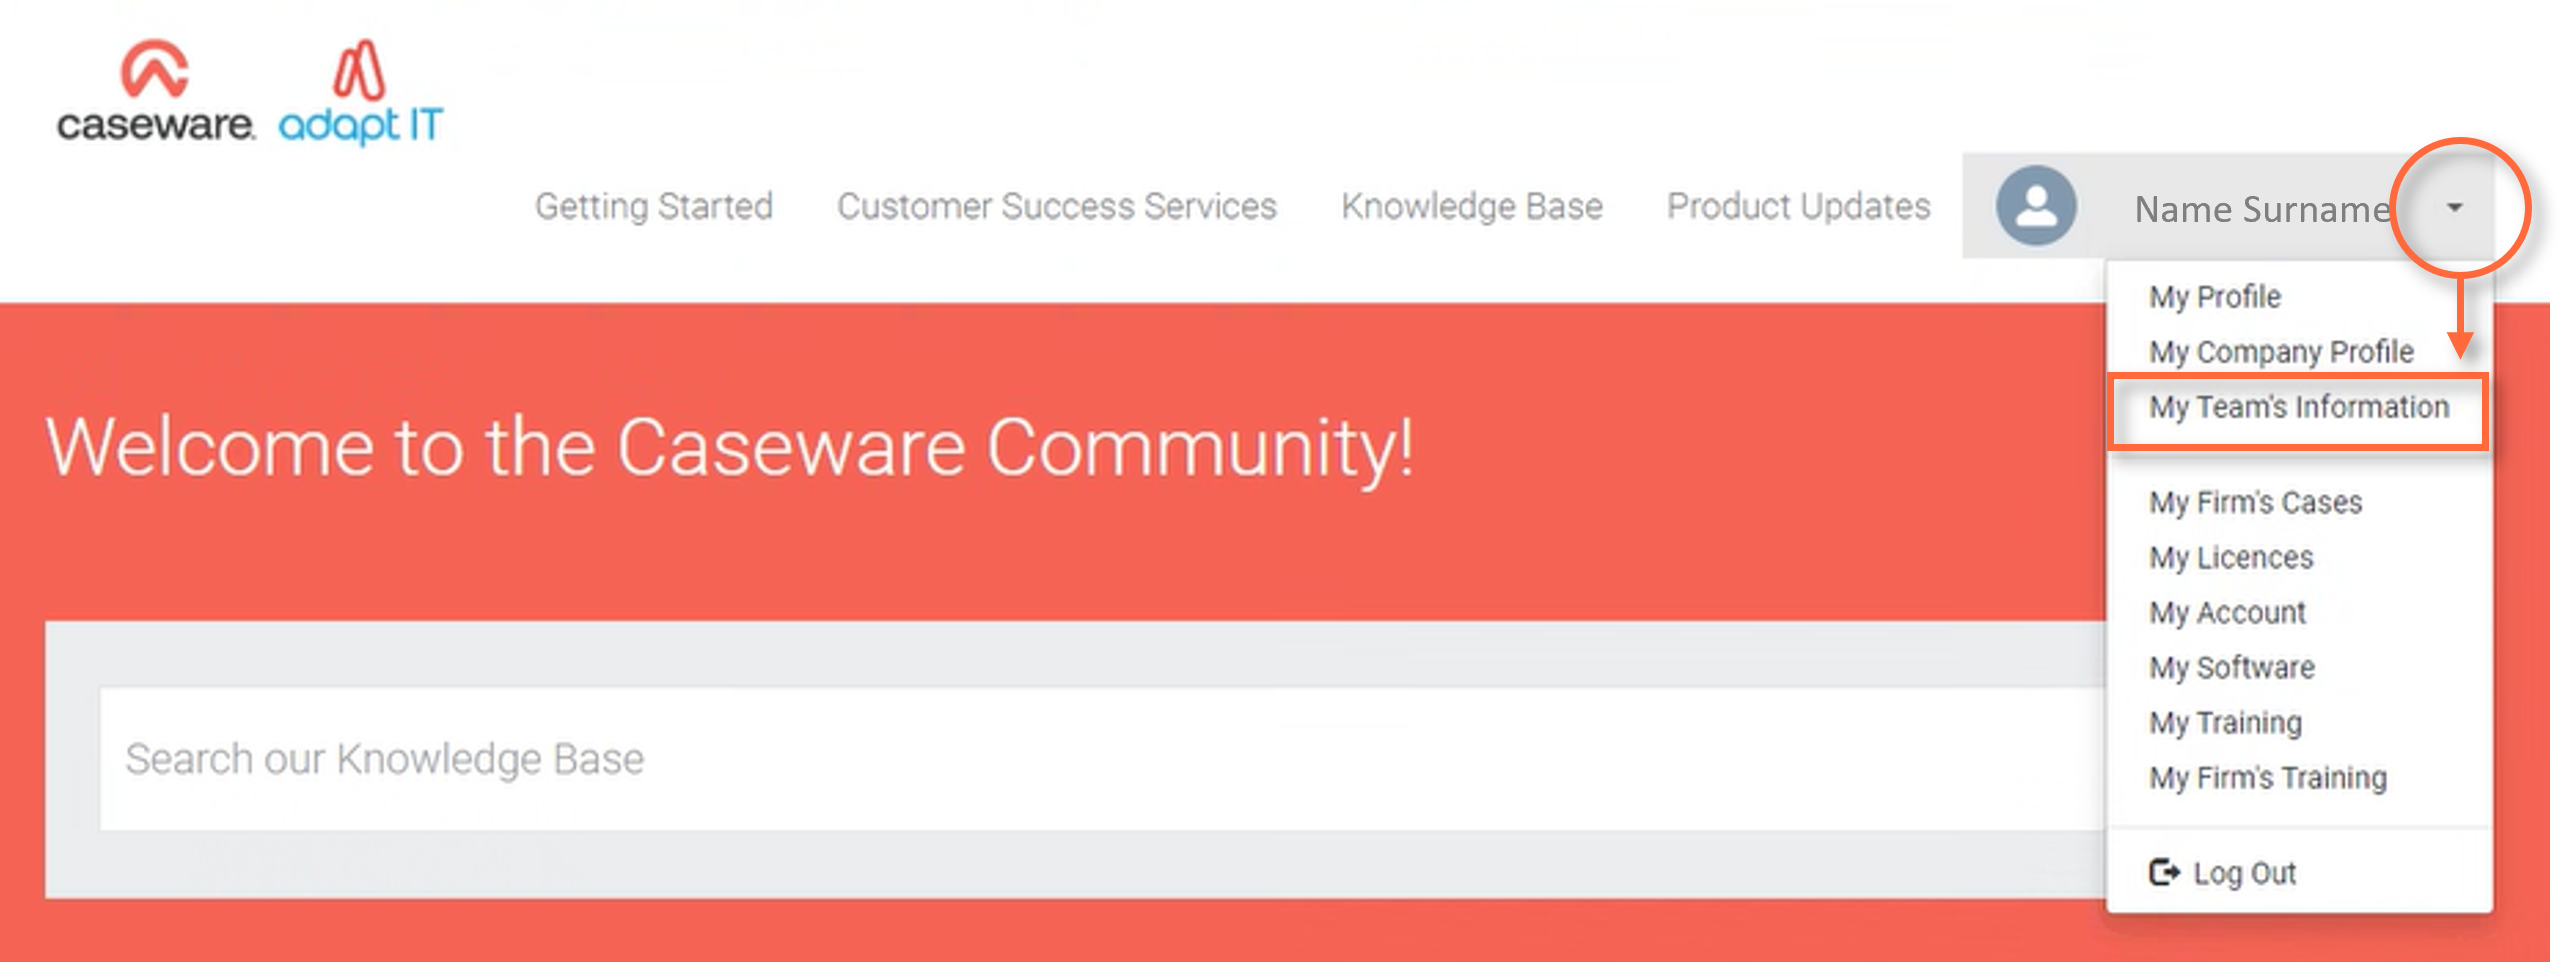 Caseware Community My Team's Information